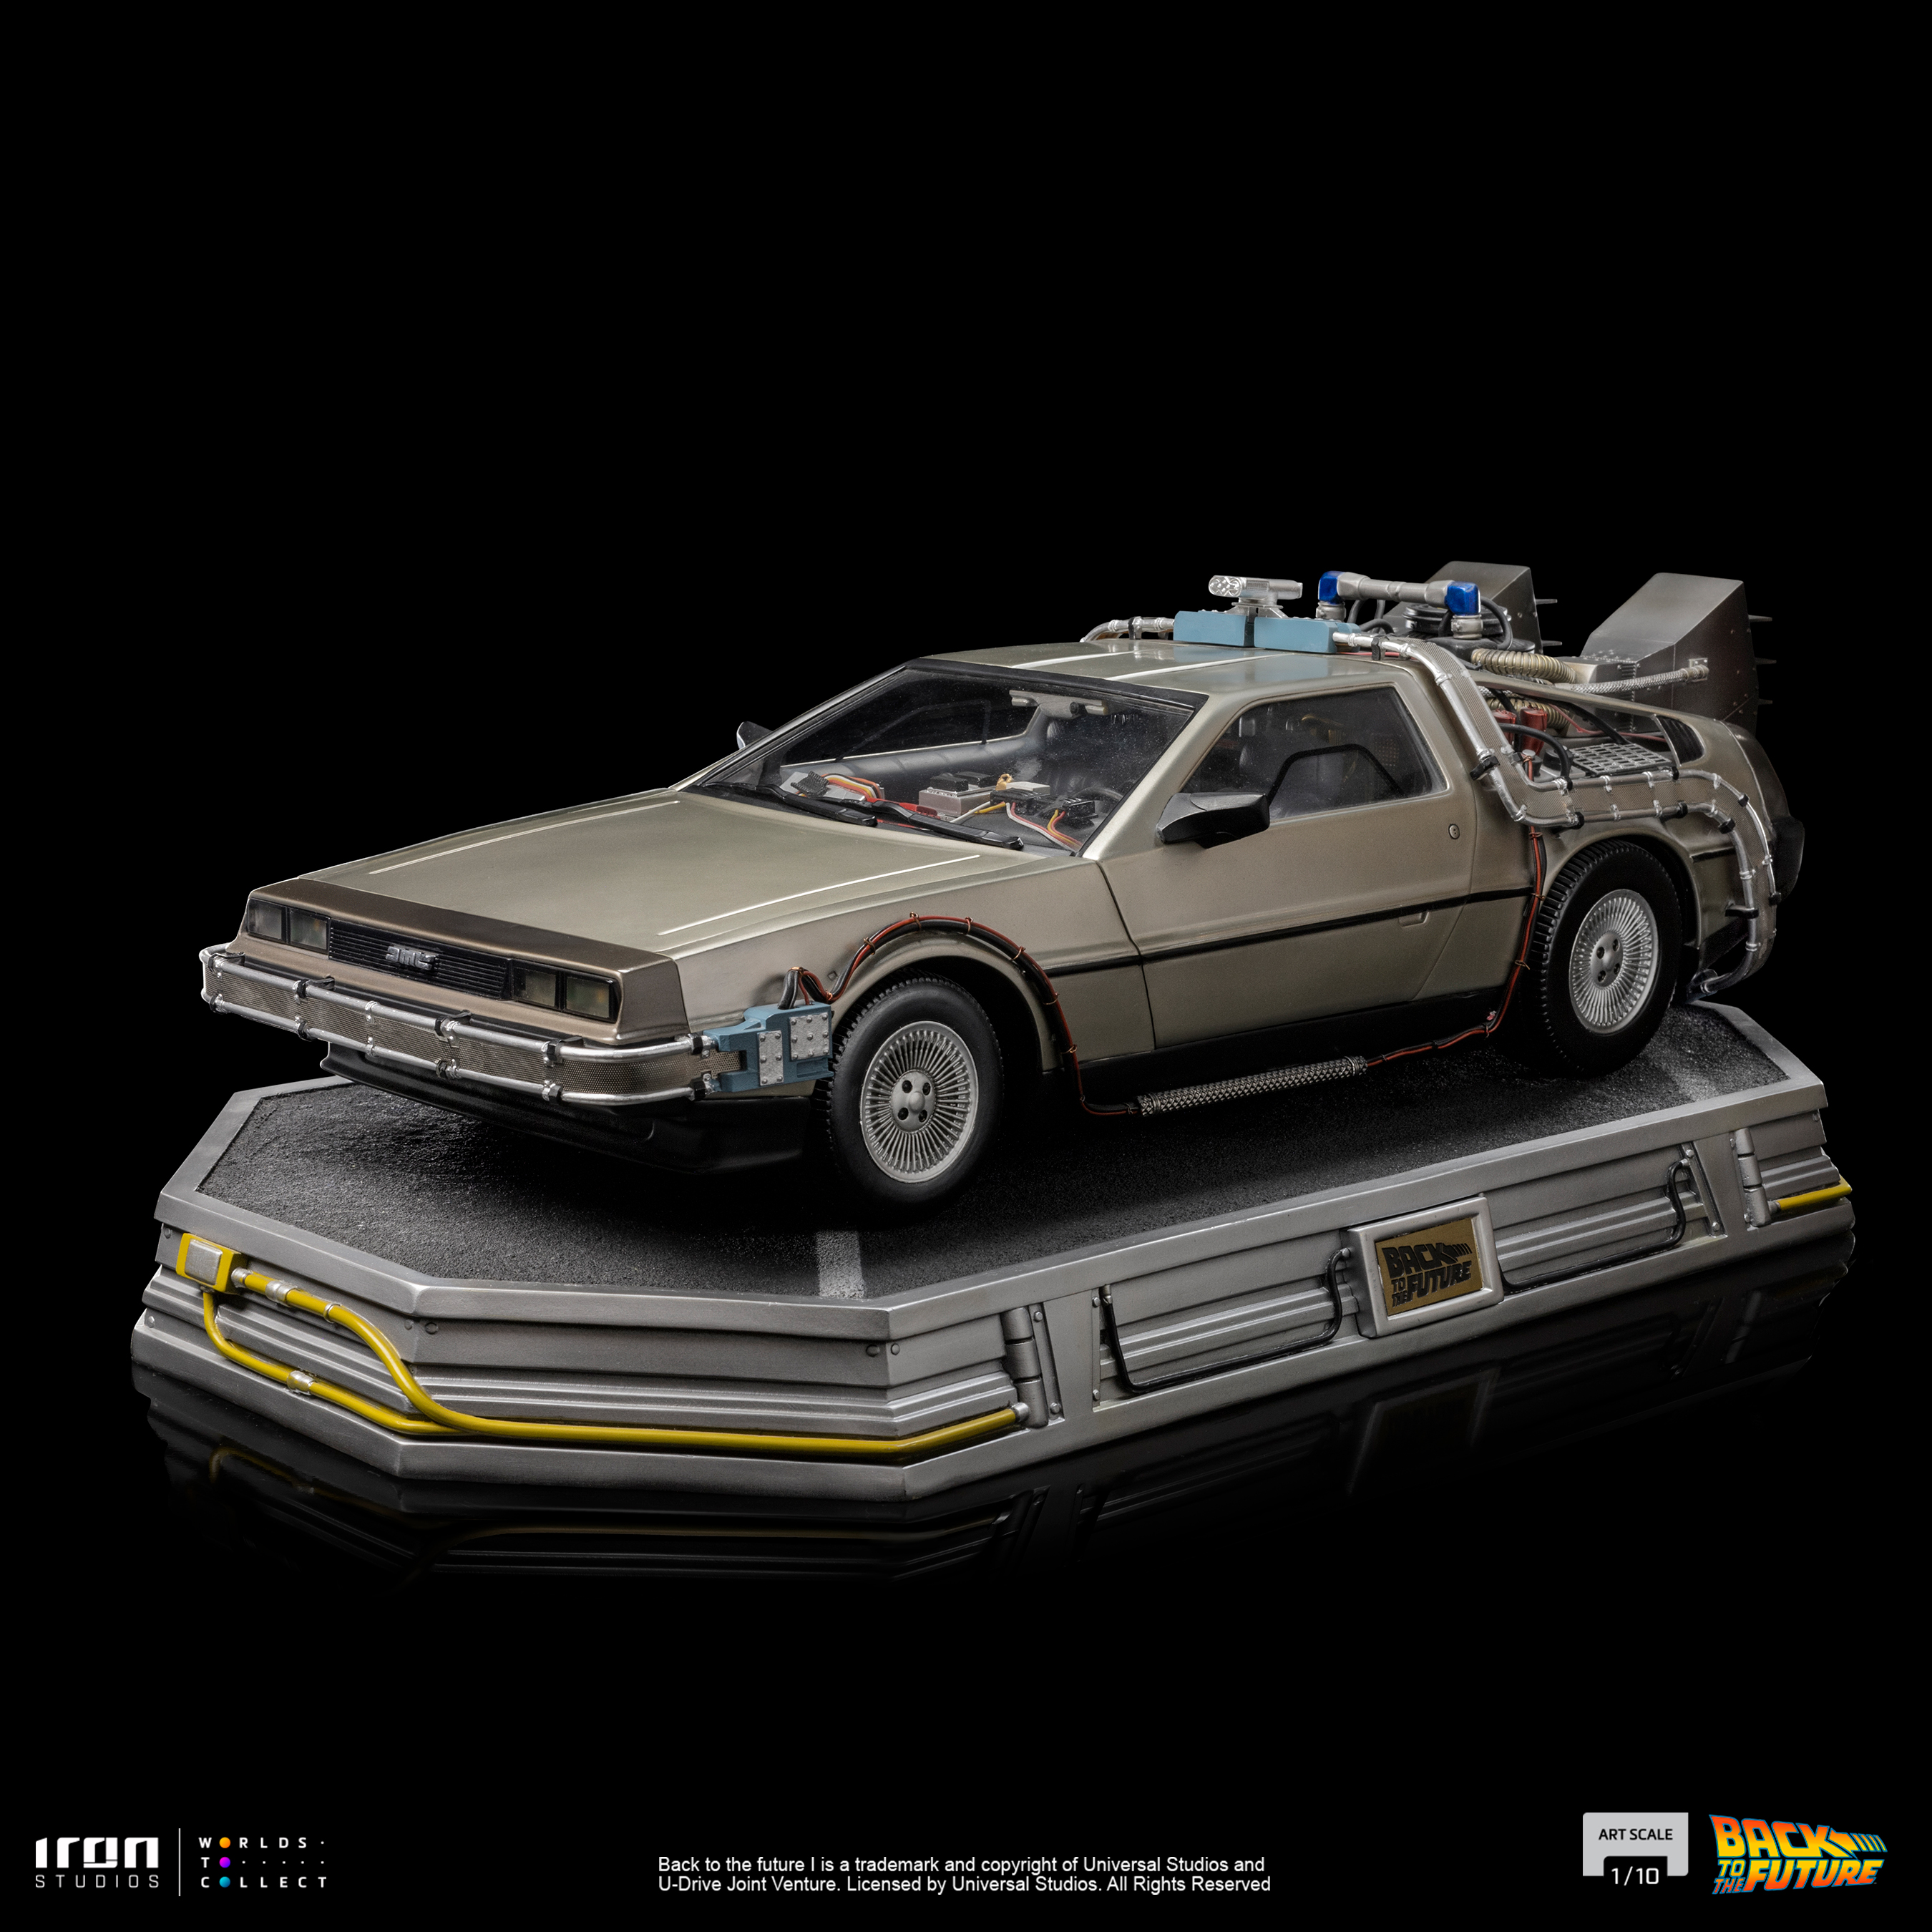 DeLorean Collector Edition - Prototype Shown